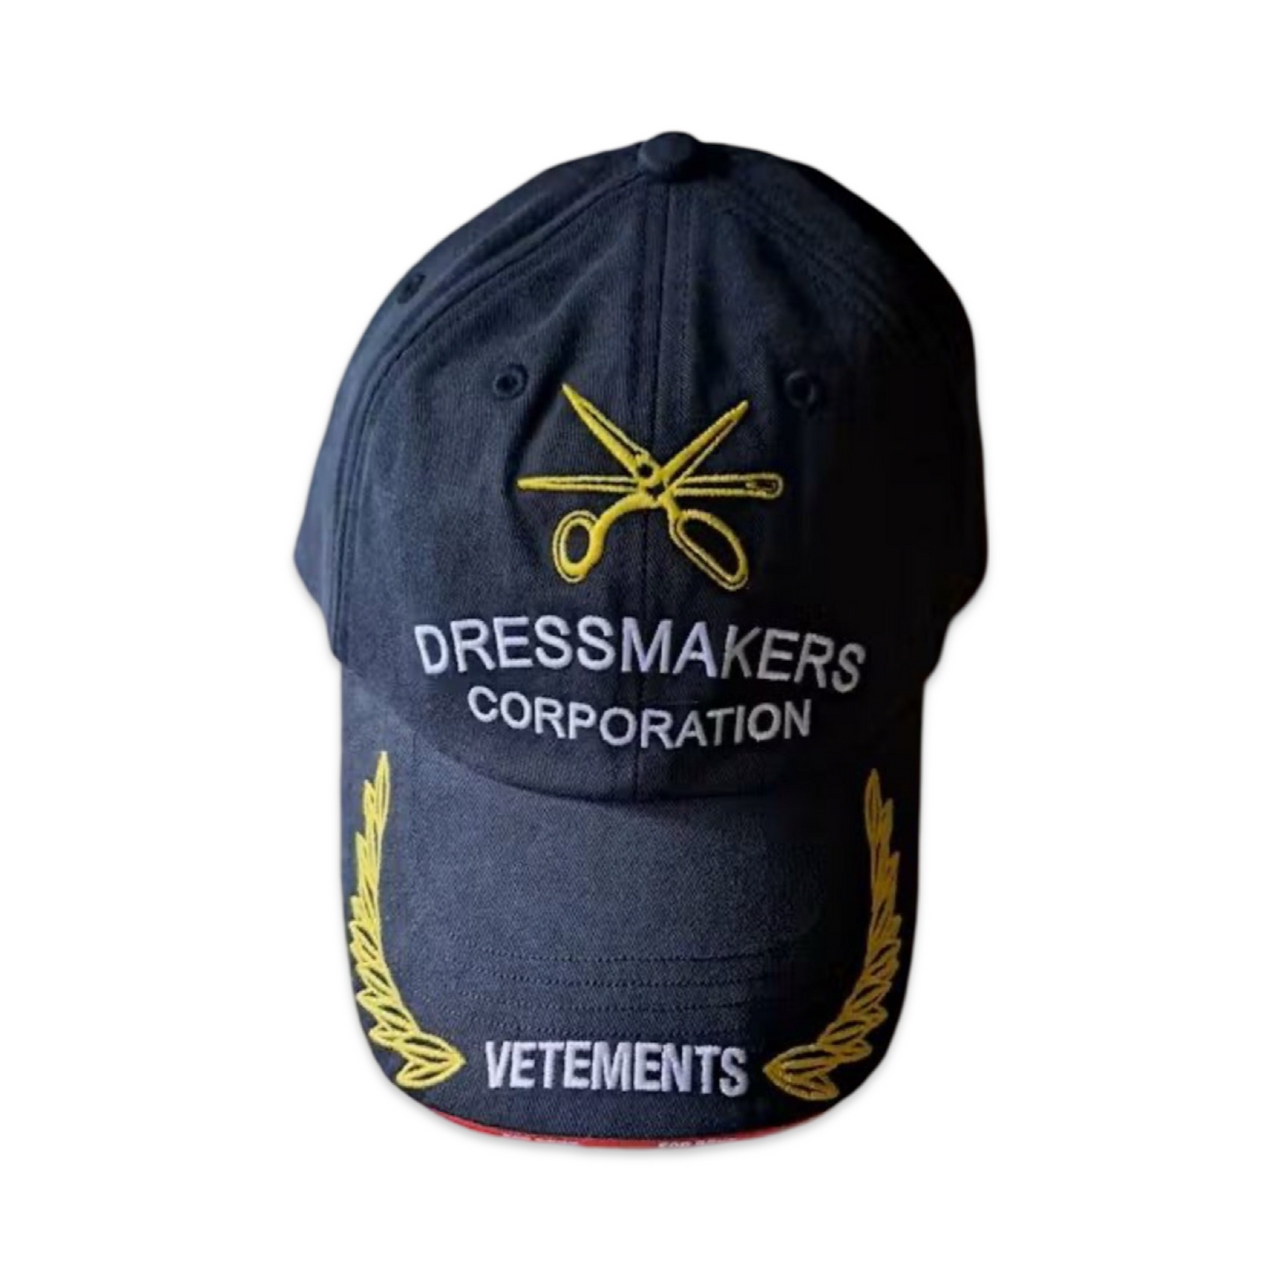 Vetements X Reebok Dressmakers Corporation Hat